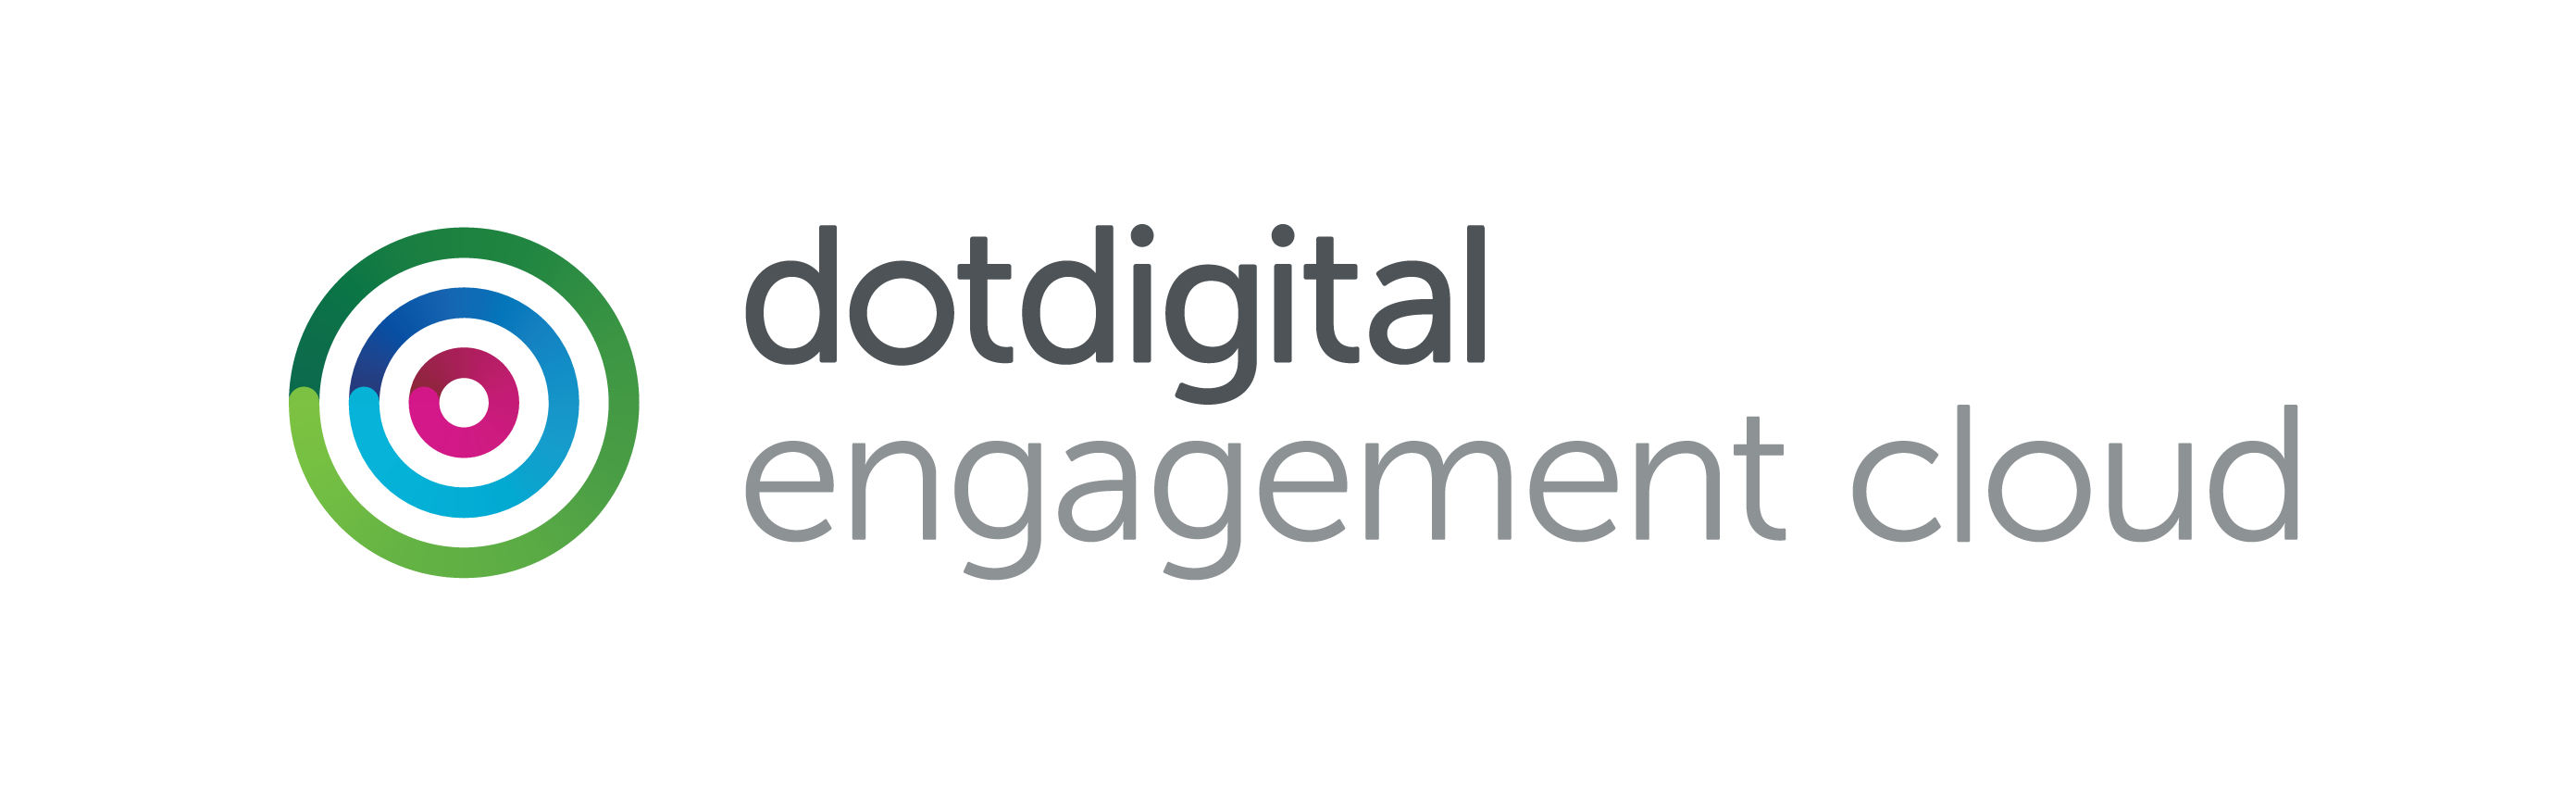 dotdigital engagement